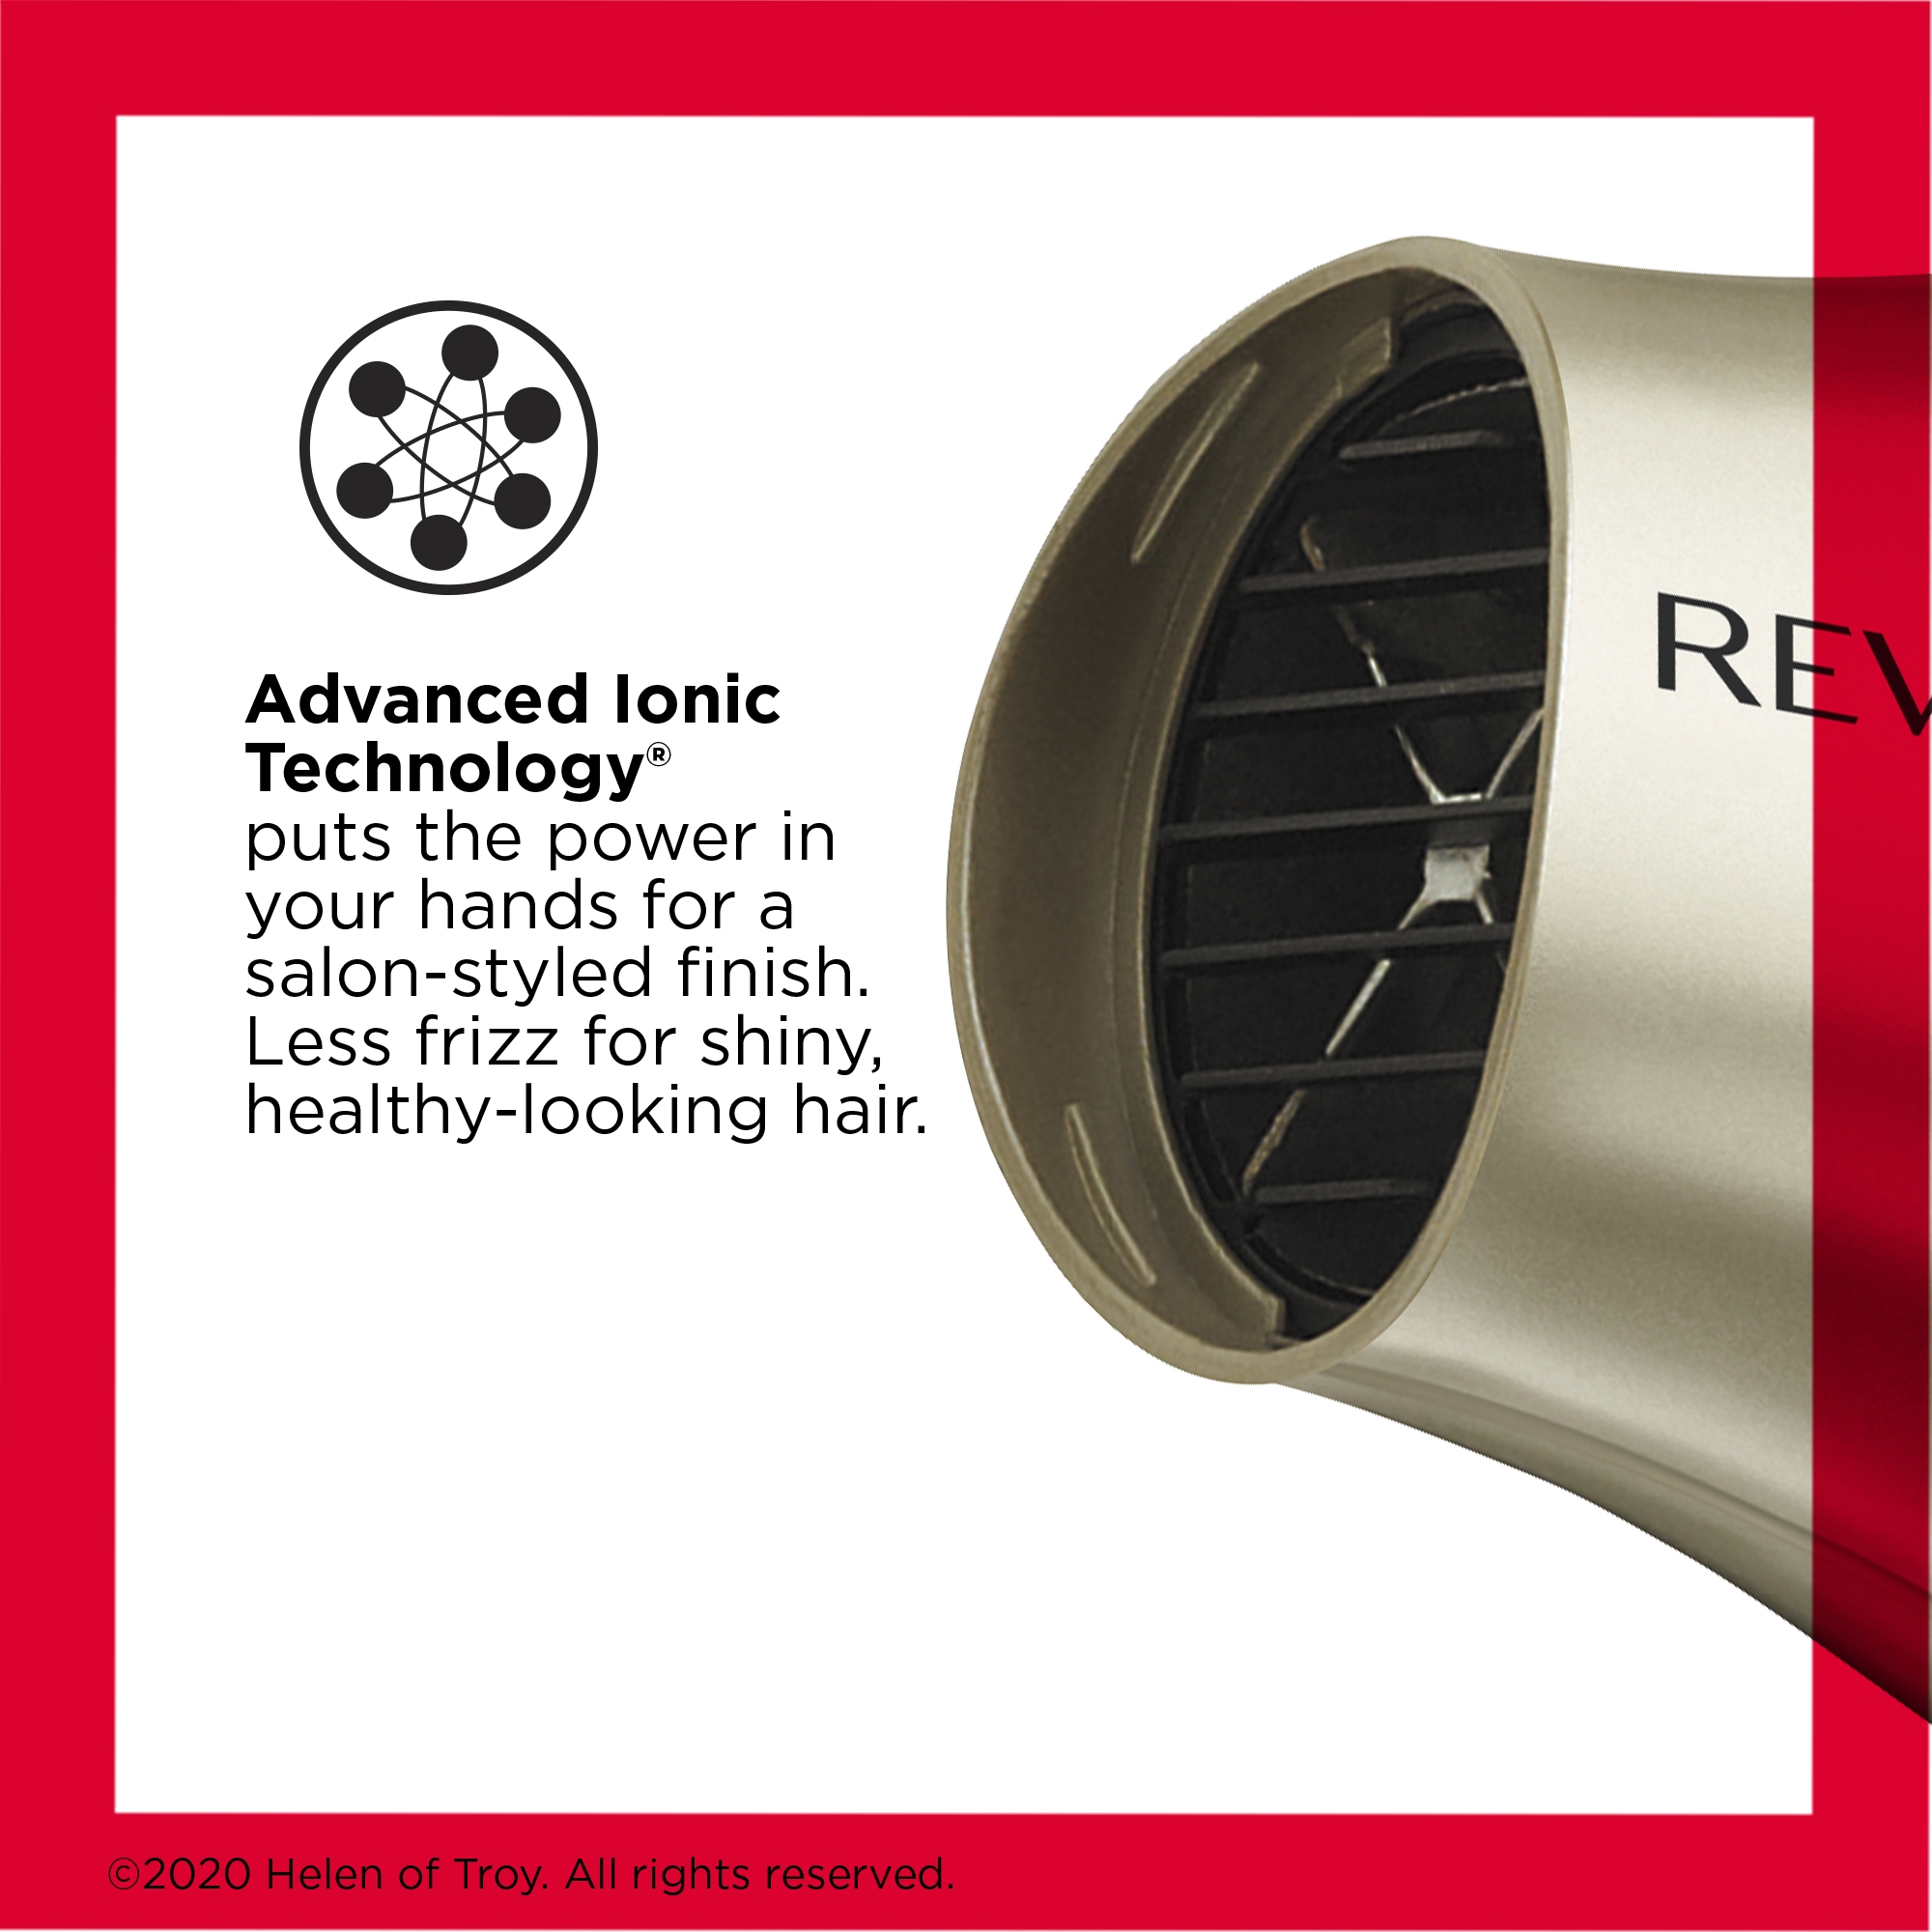 Revlon 1875W Folding Handle Ionic Travel Hair Dryer, Black and Gold - image 2 of 7